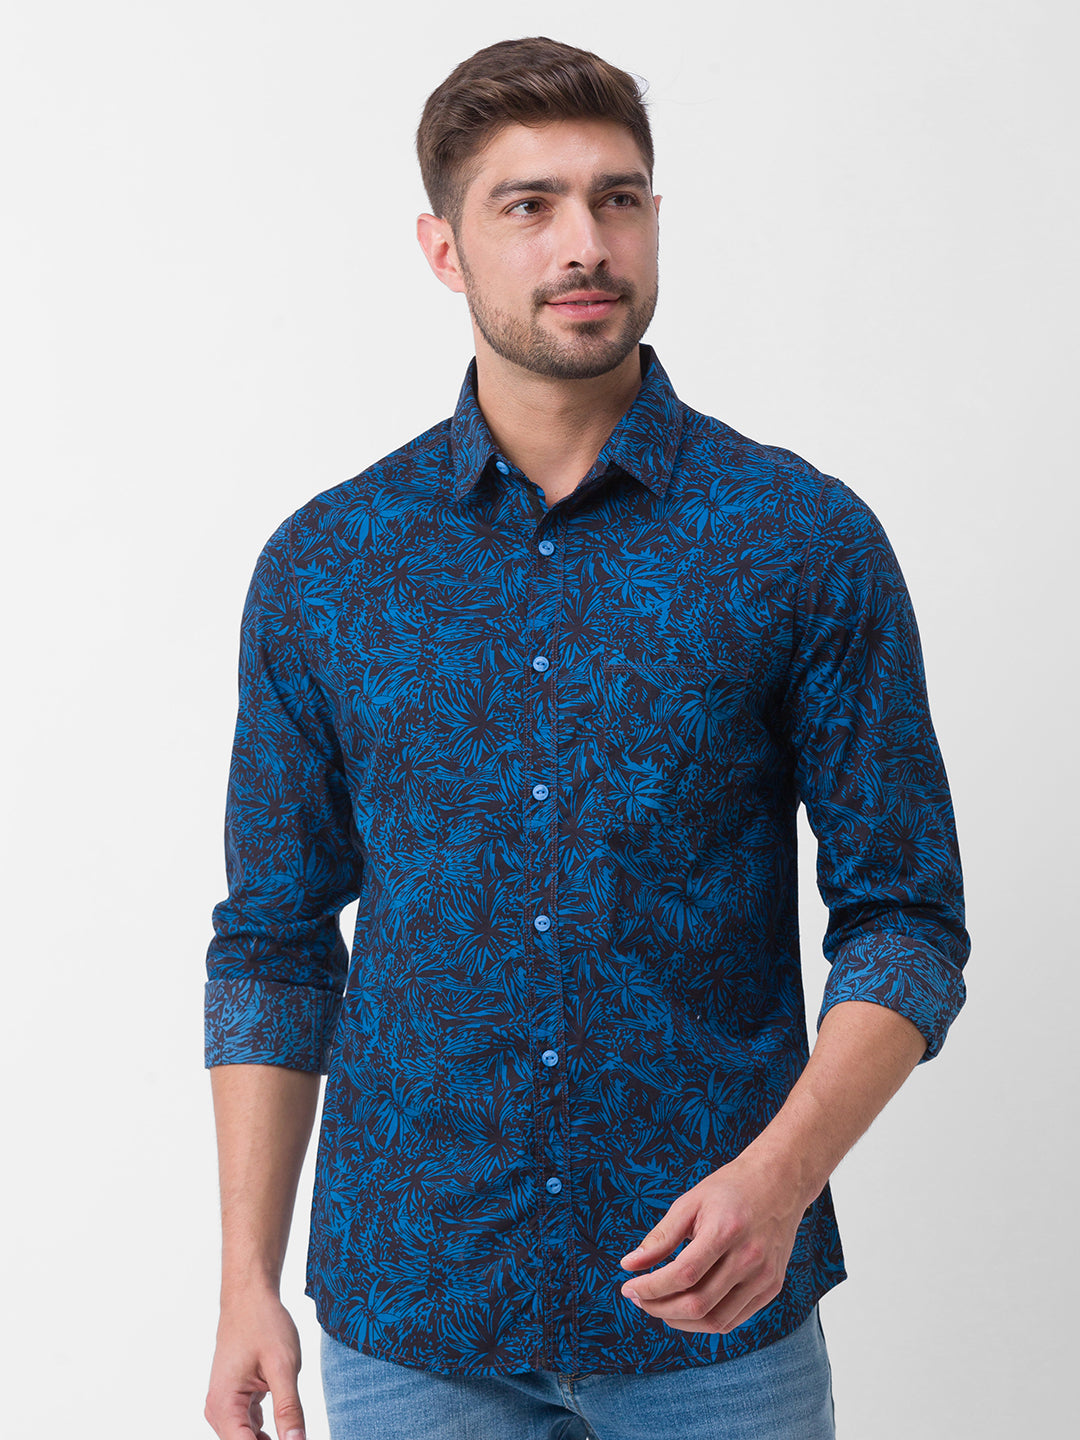 Spykar Indigo Blue Cotton Full Sleeve Printed Shirt For Men